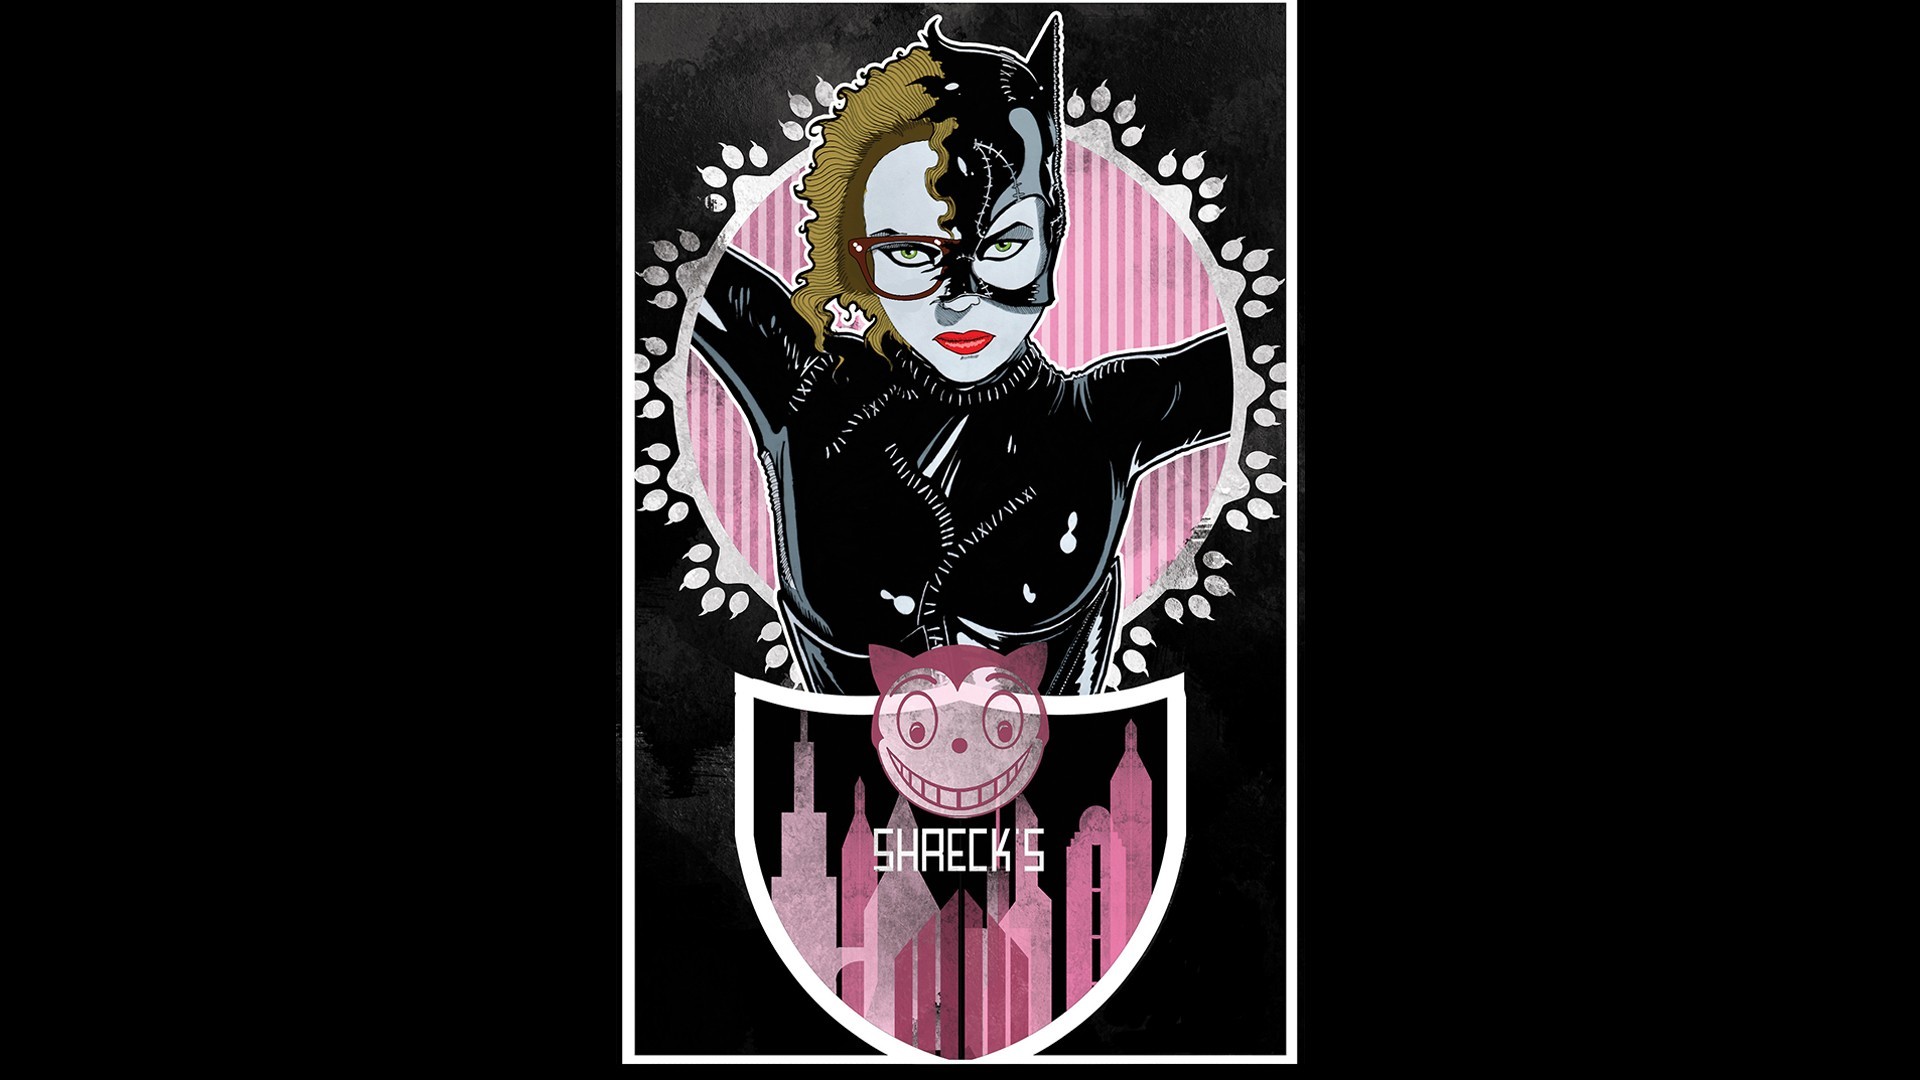 General 1920x1080 DC Comics Catwoman Michelle Pfeiffer Batman women artwork red lipstick Selina Kyle